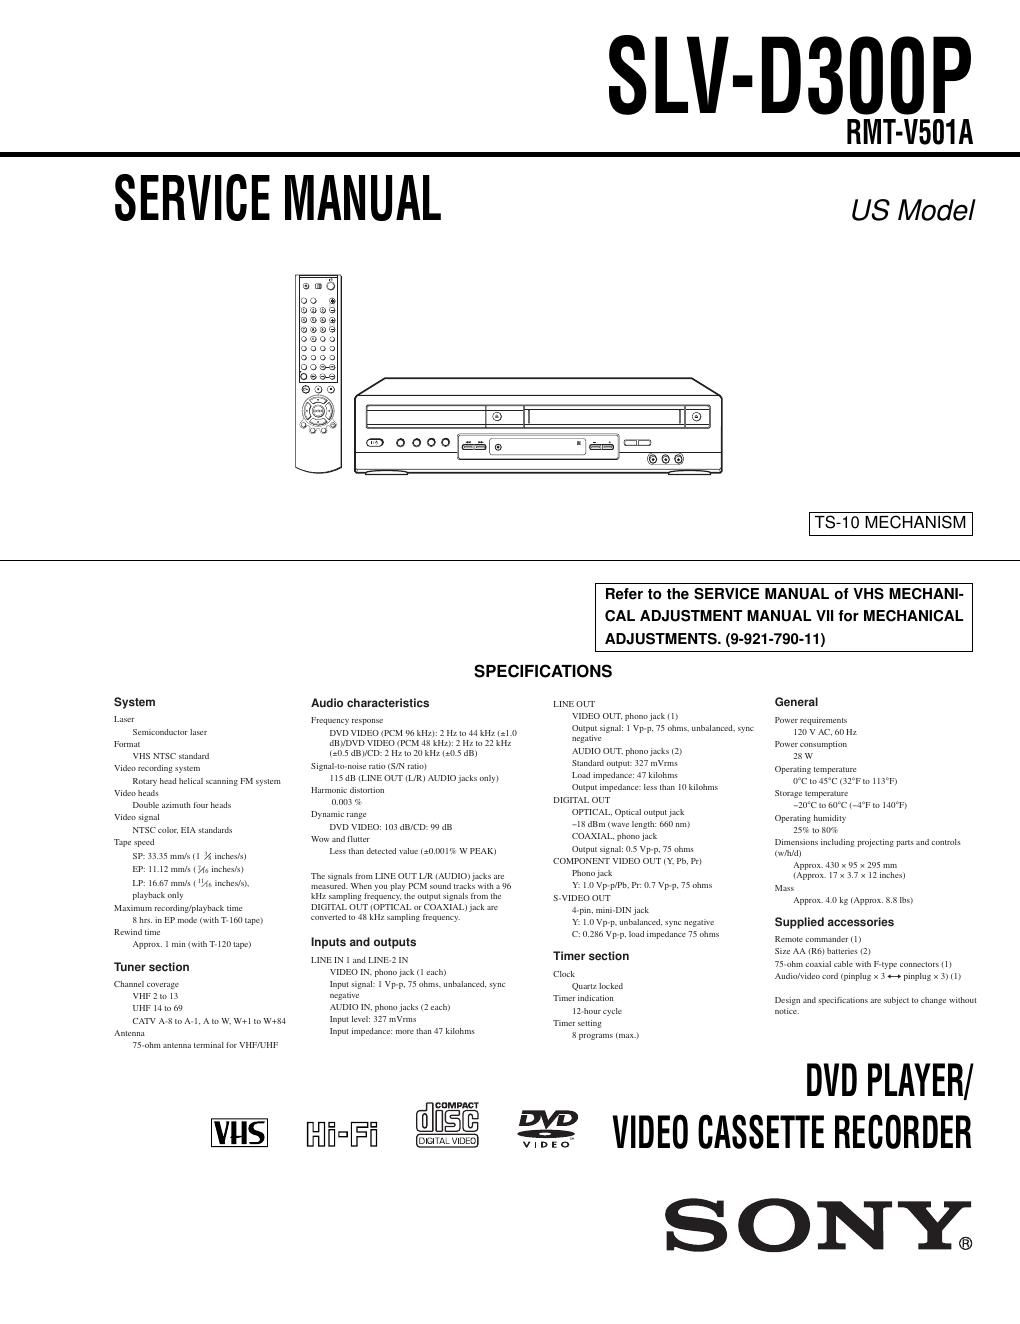 sony slv d 300 p service manual